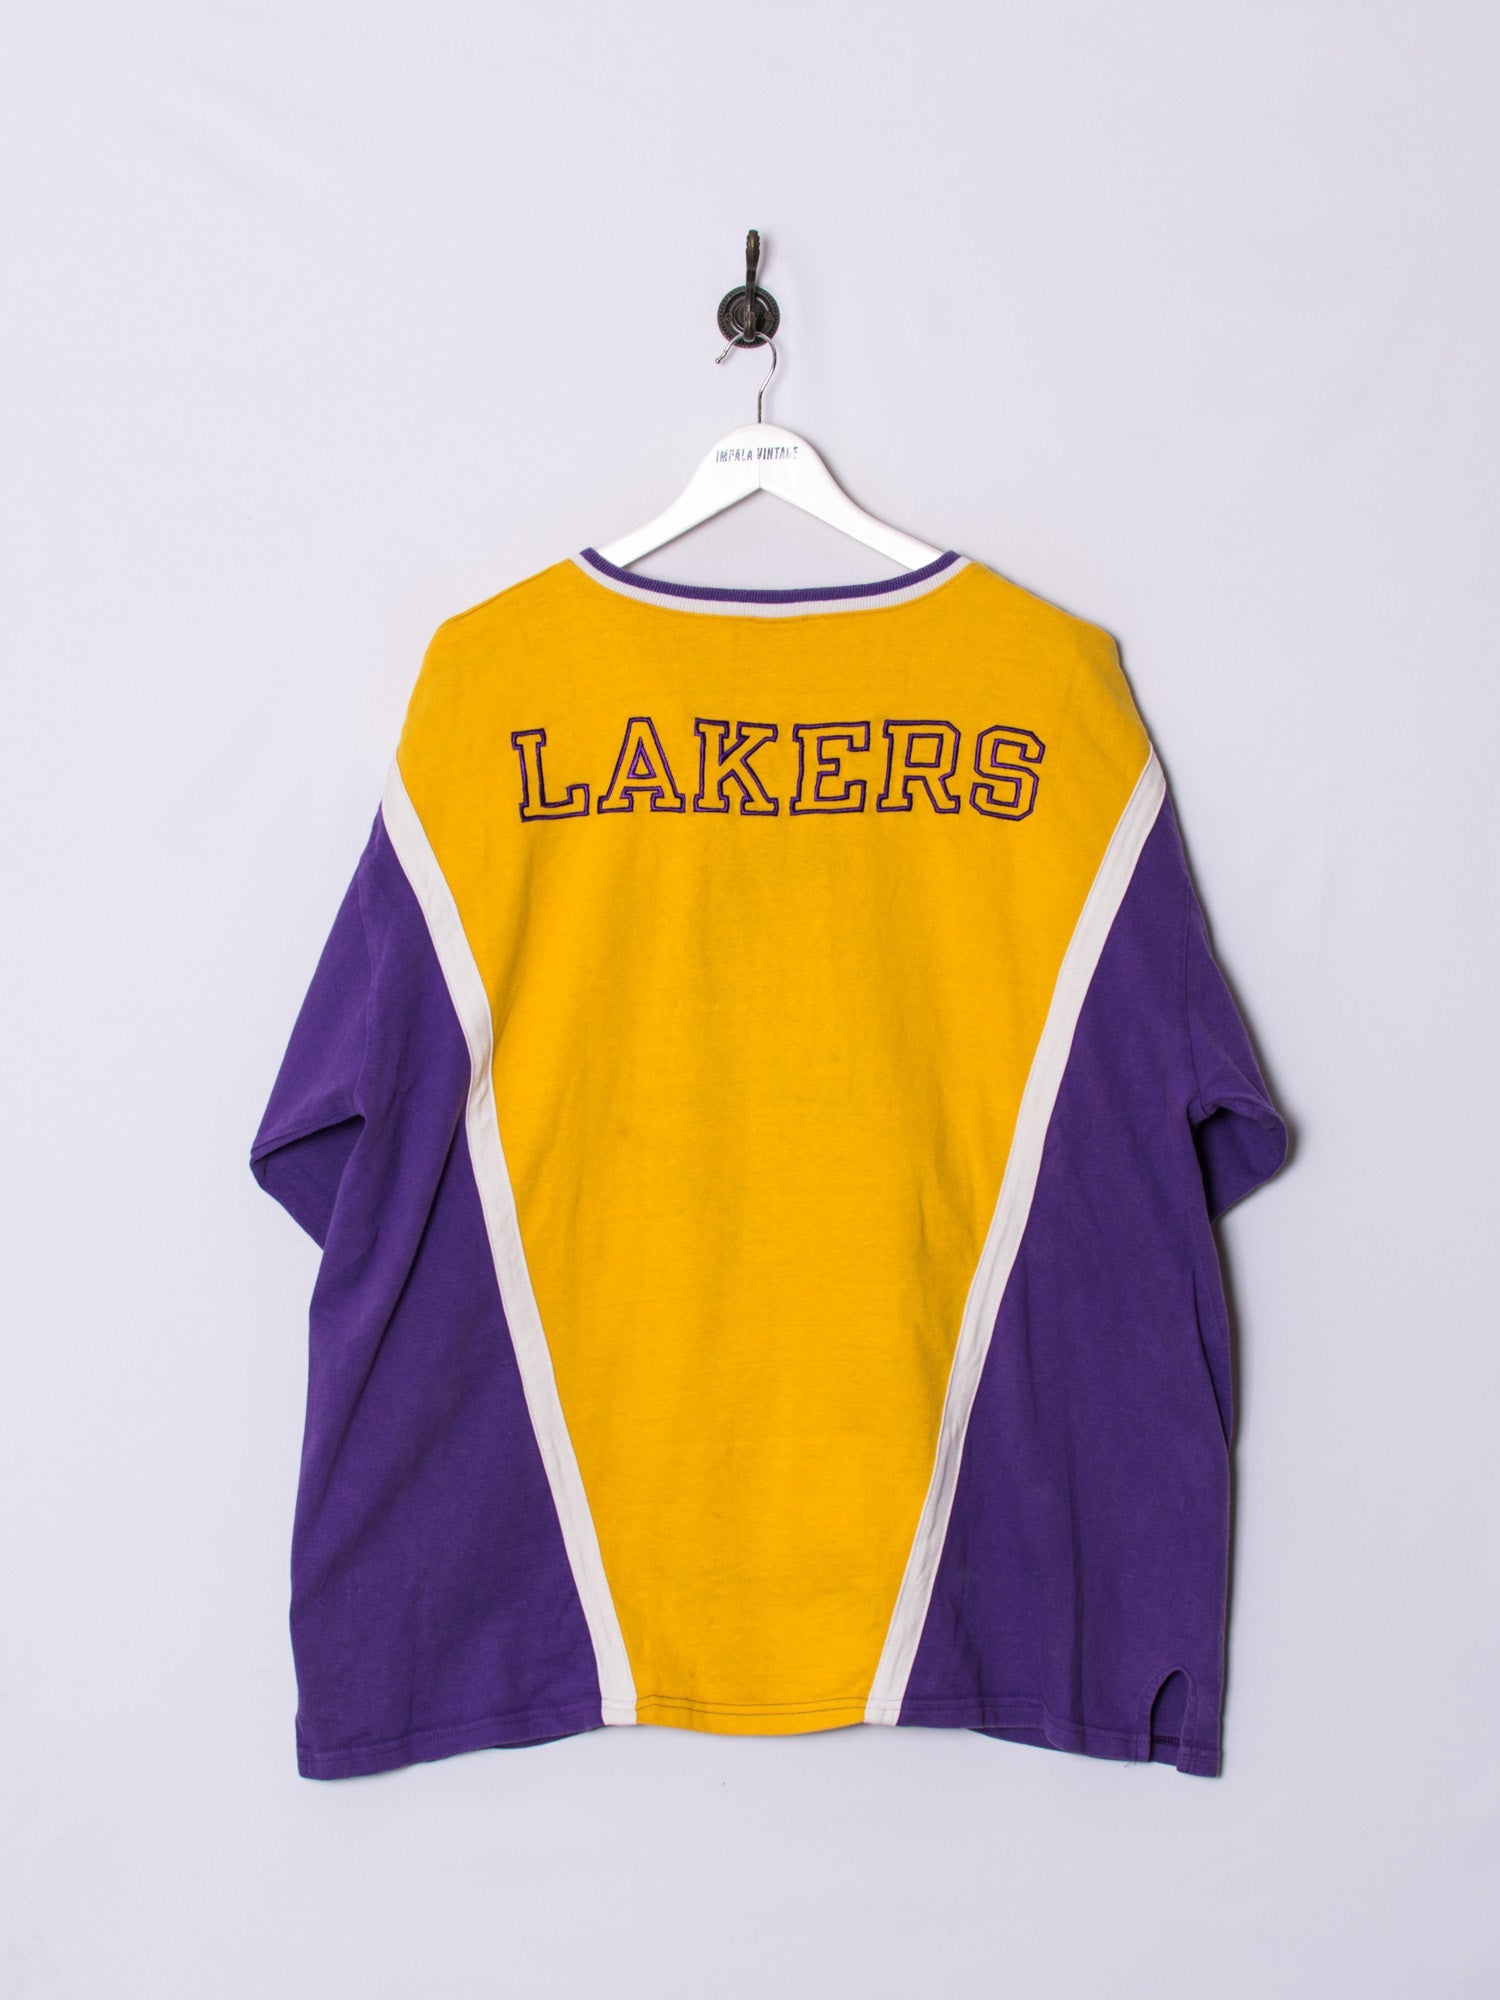 Champion Shooting Shirt Los Angeles Lakers Size L Retro 